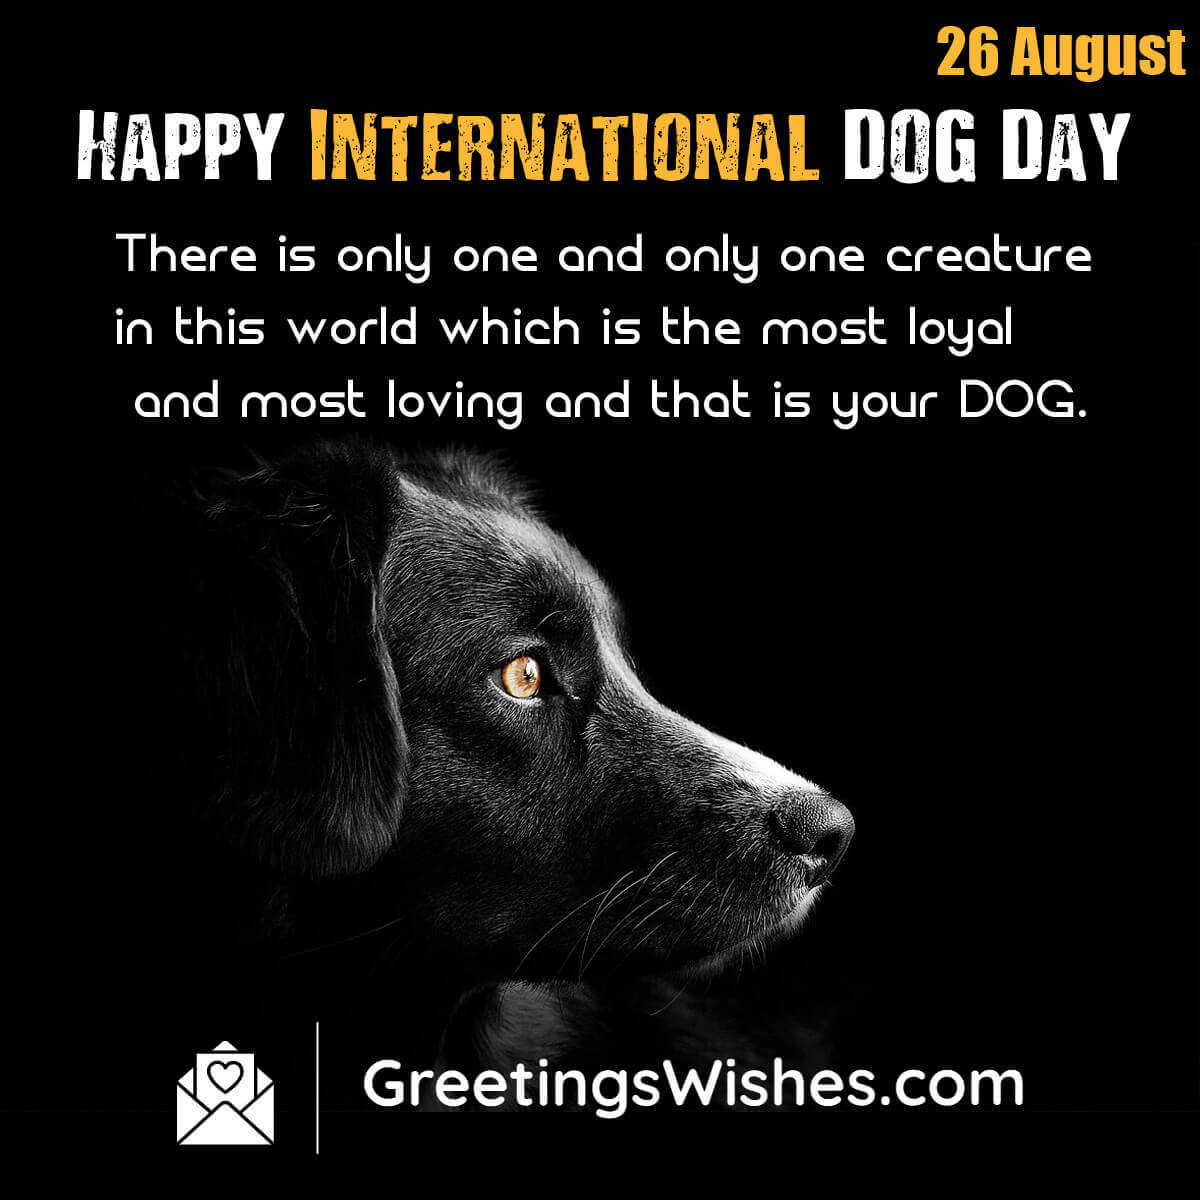 International Dog Day Wishes (26 August)